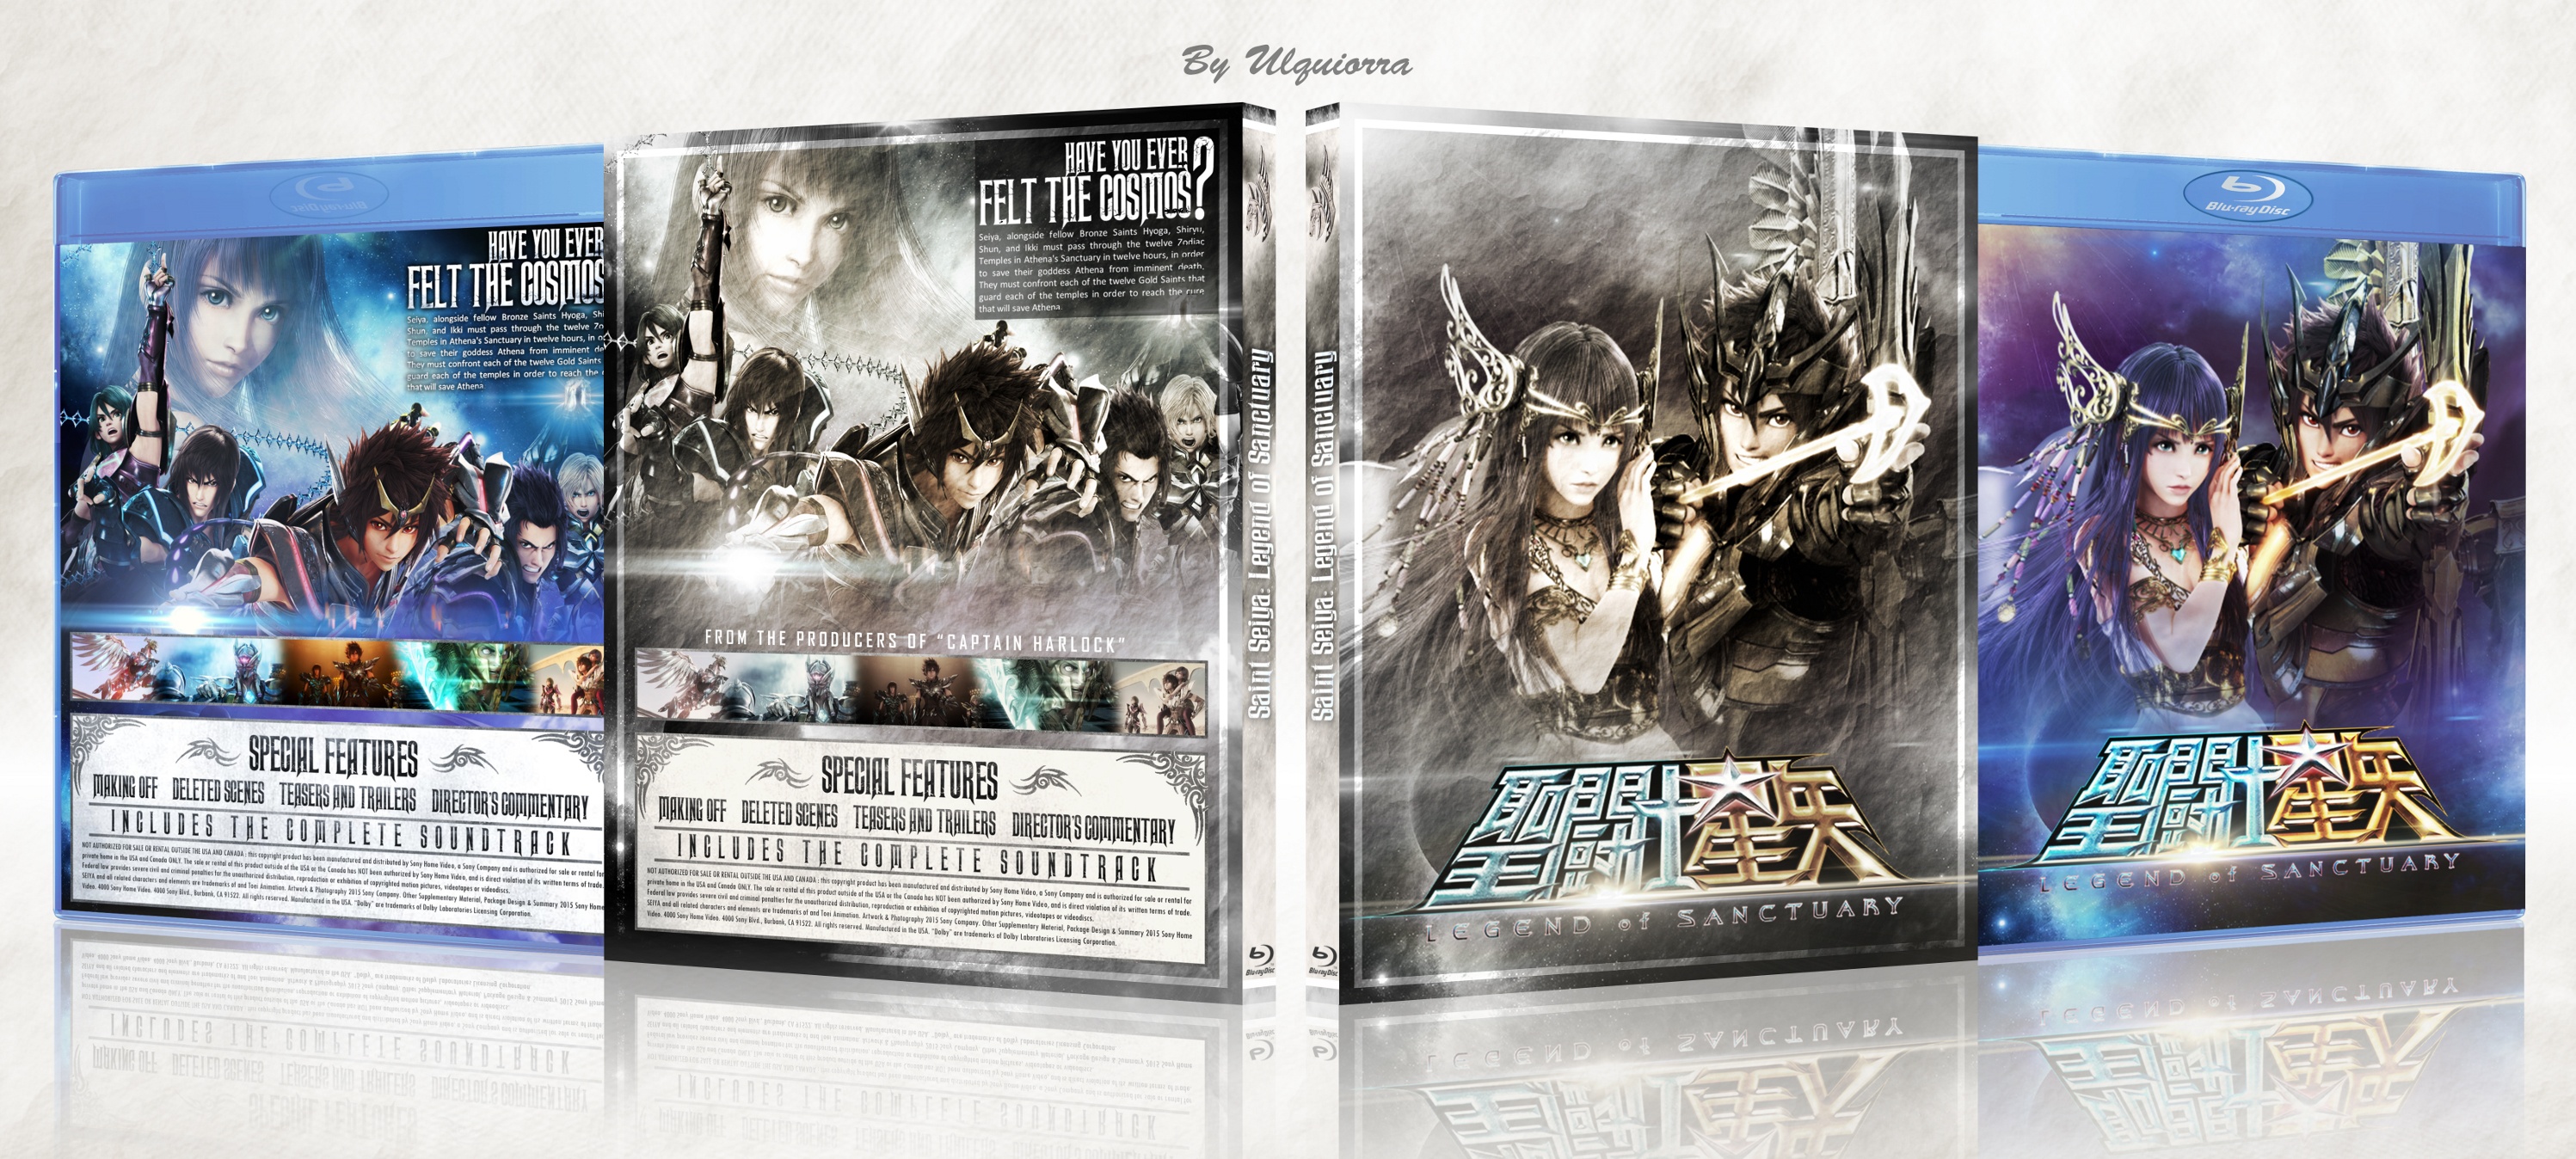 Saint Seiya: Legend of Sanctuary box cover